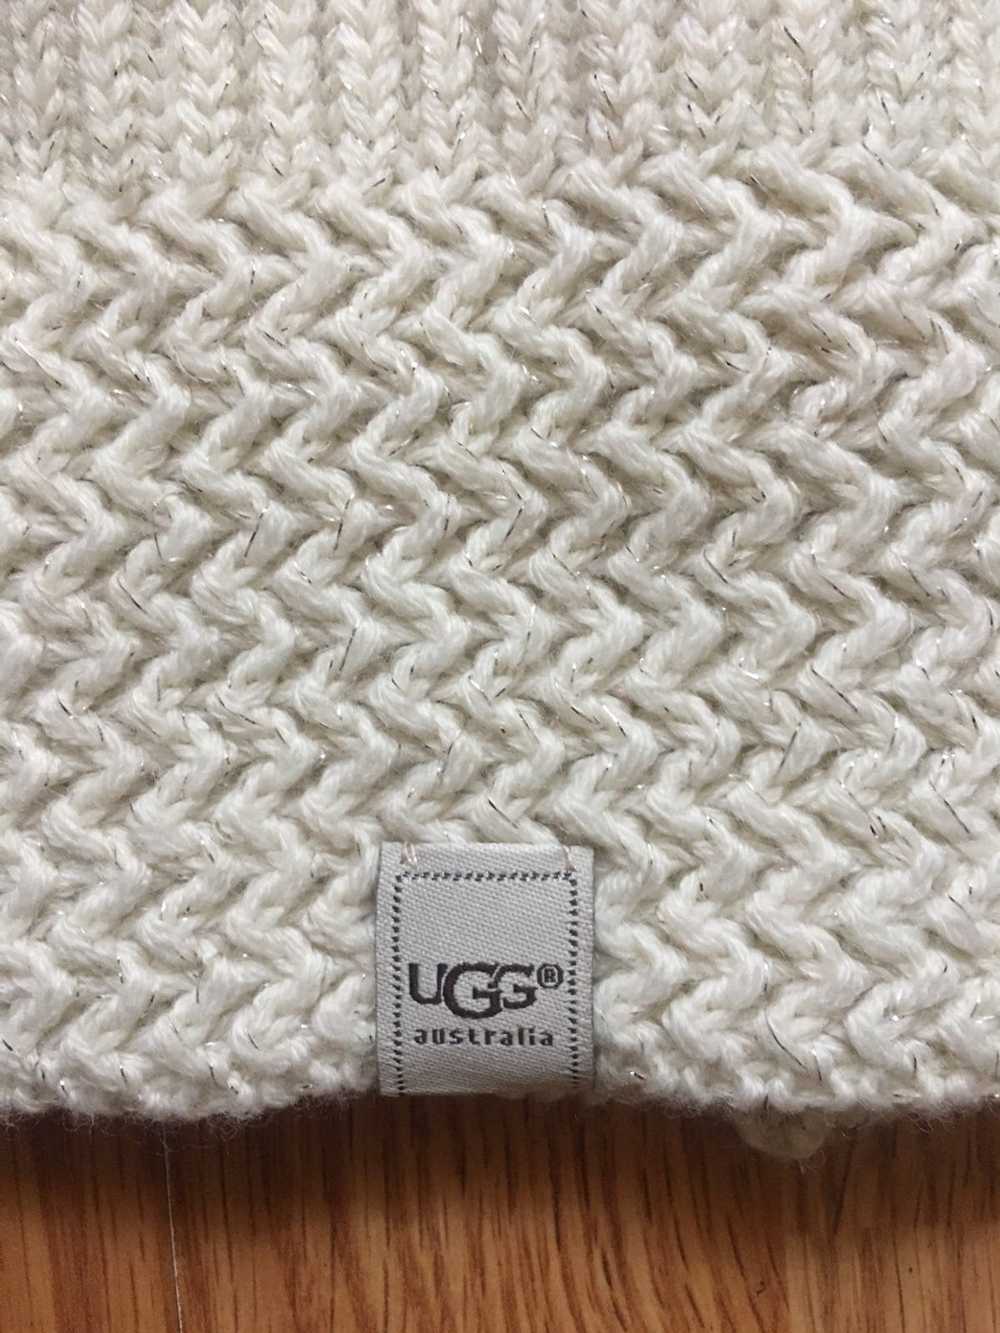 Ugg Woman’s UGG Australia Beige Knit Wool Snood S… - image 3